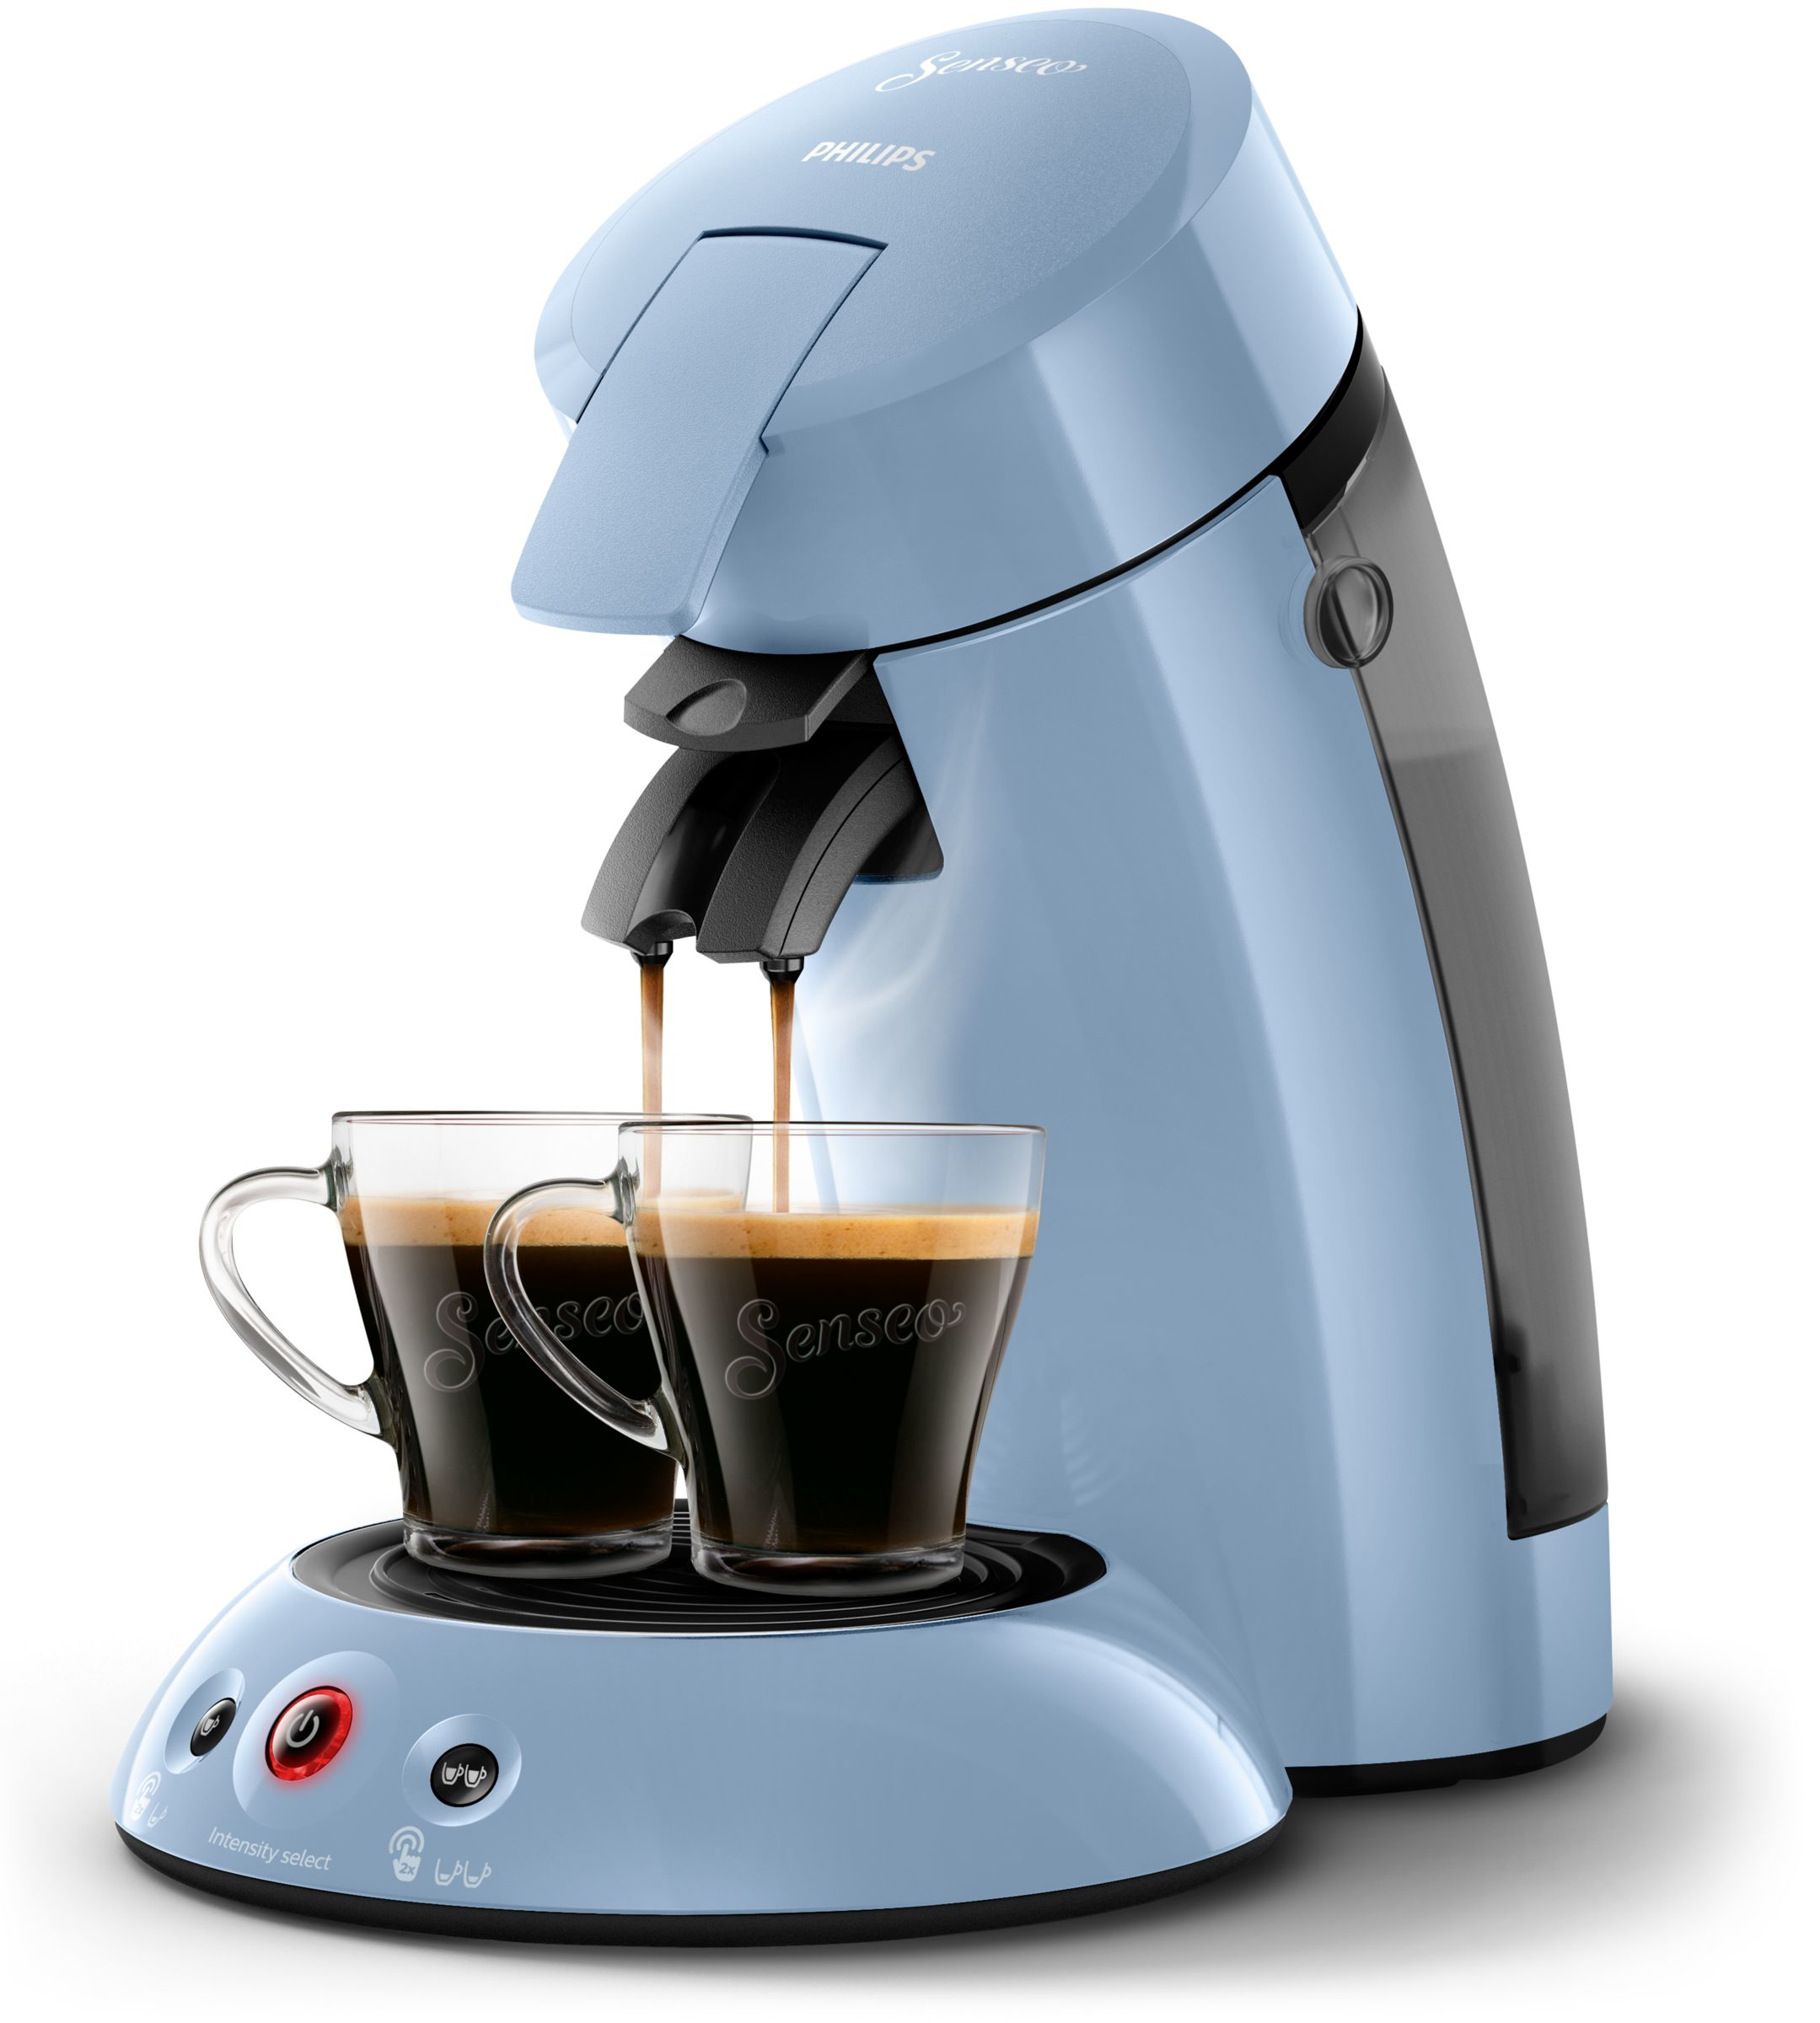 Senseo HD6554/70R1 coffee maker